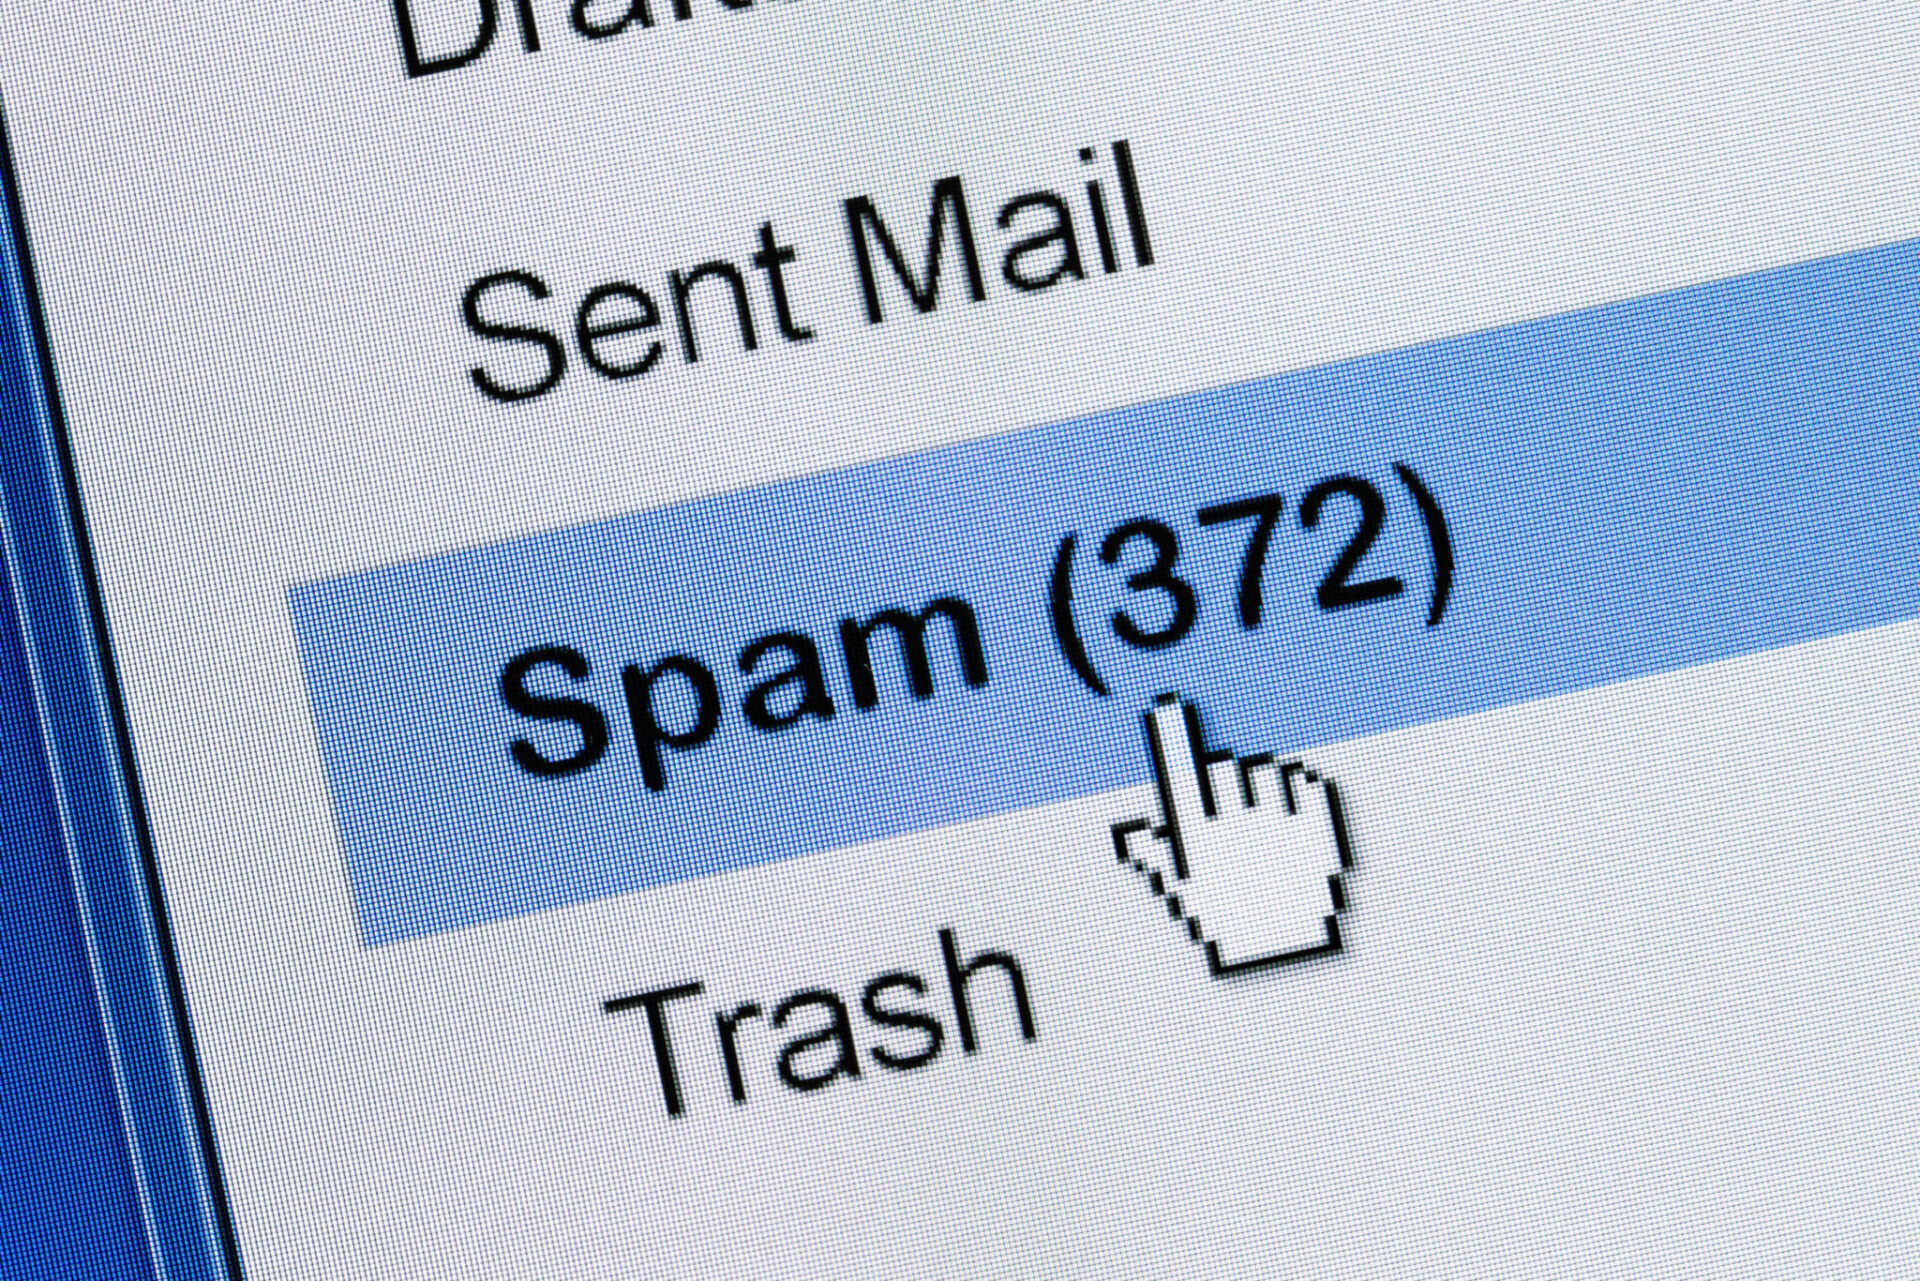 Avoid spam traps